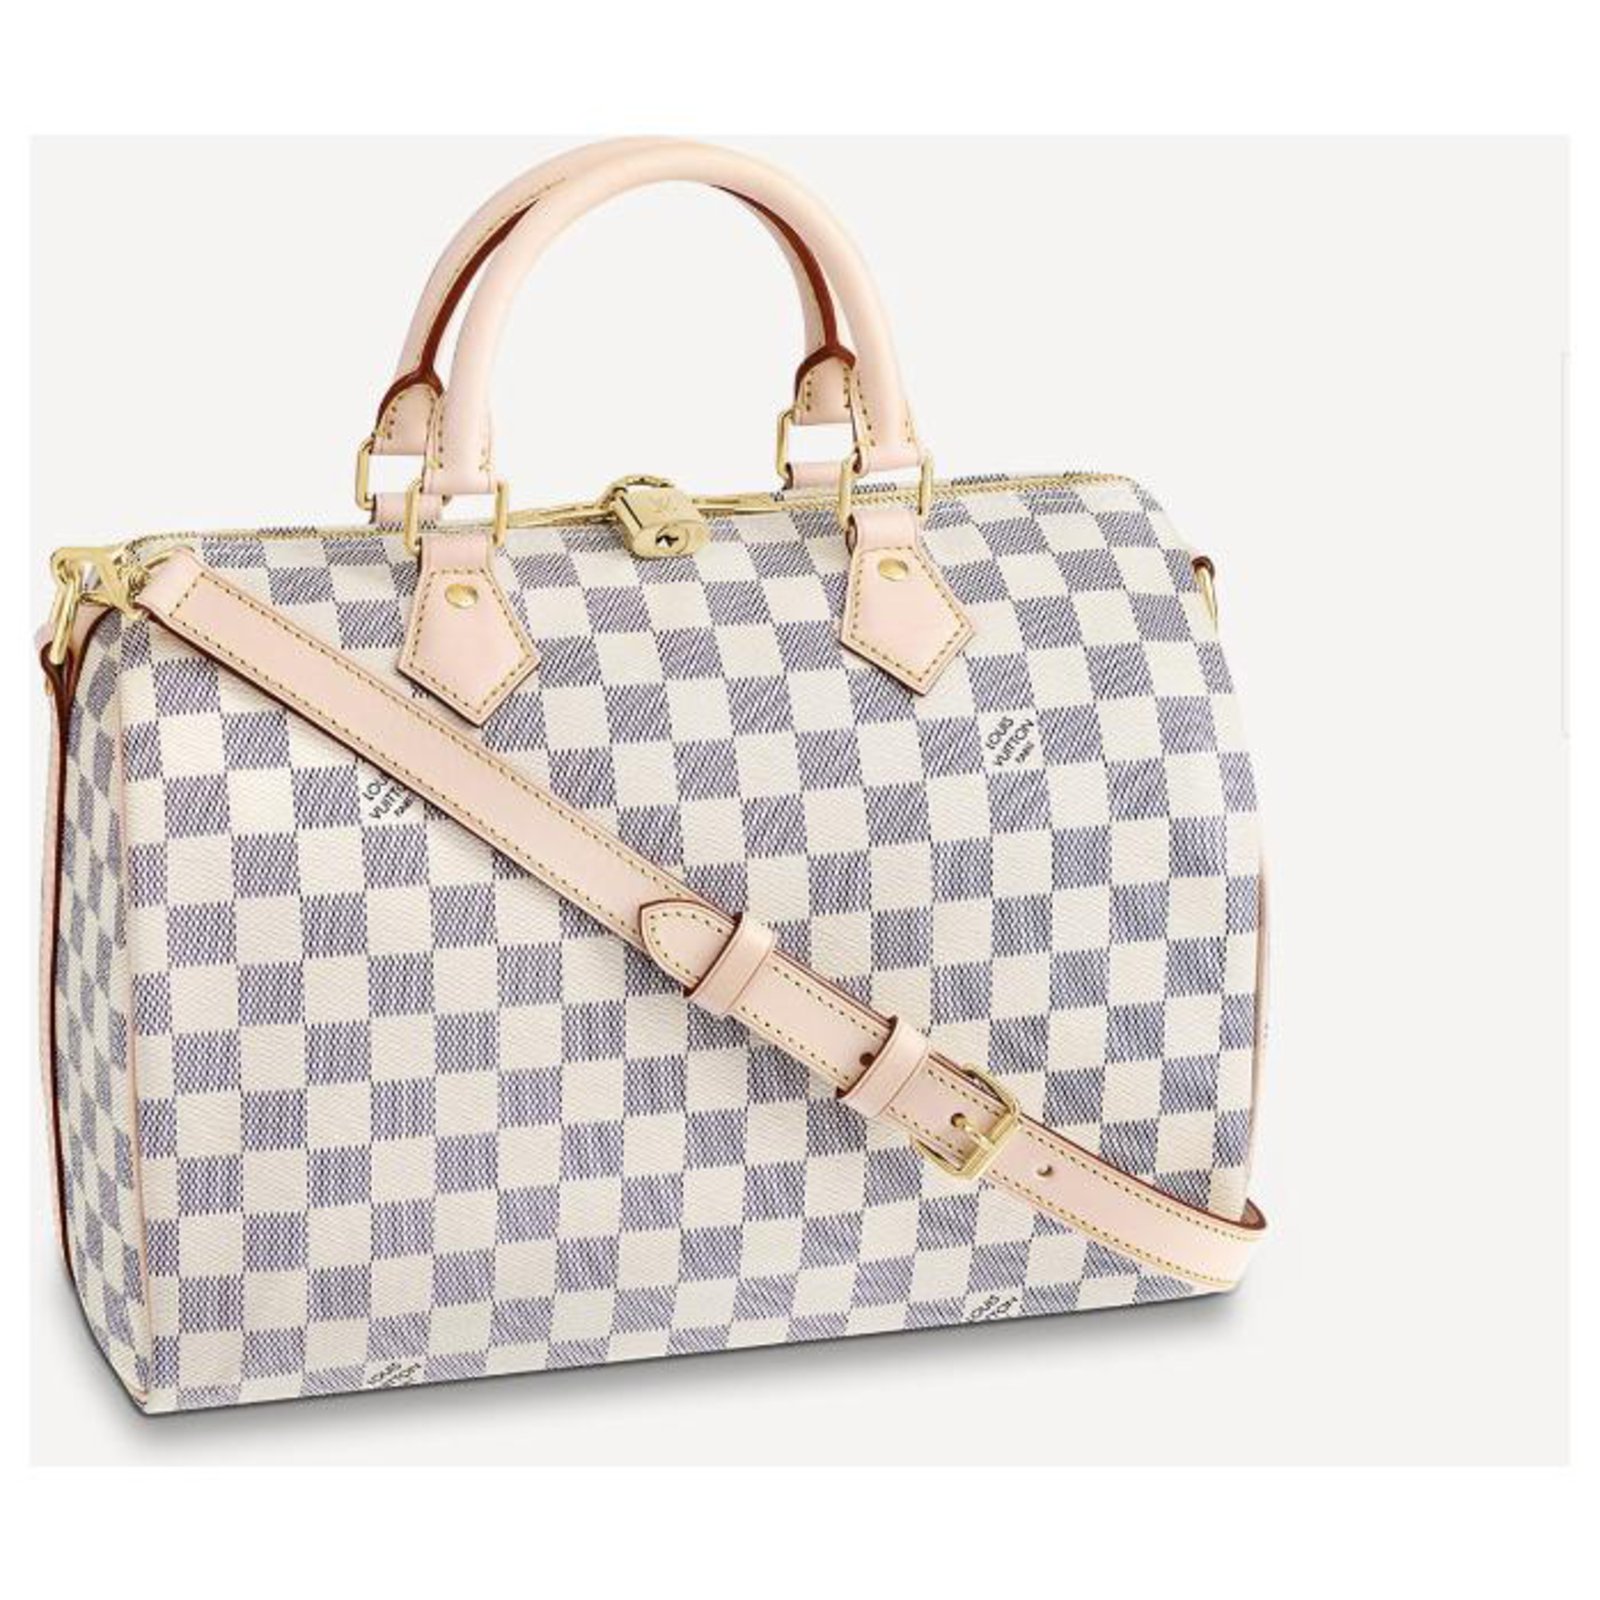 Bags Briefcases Louis Vuitton LV Speedy Damier Azur